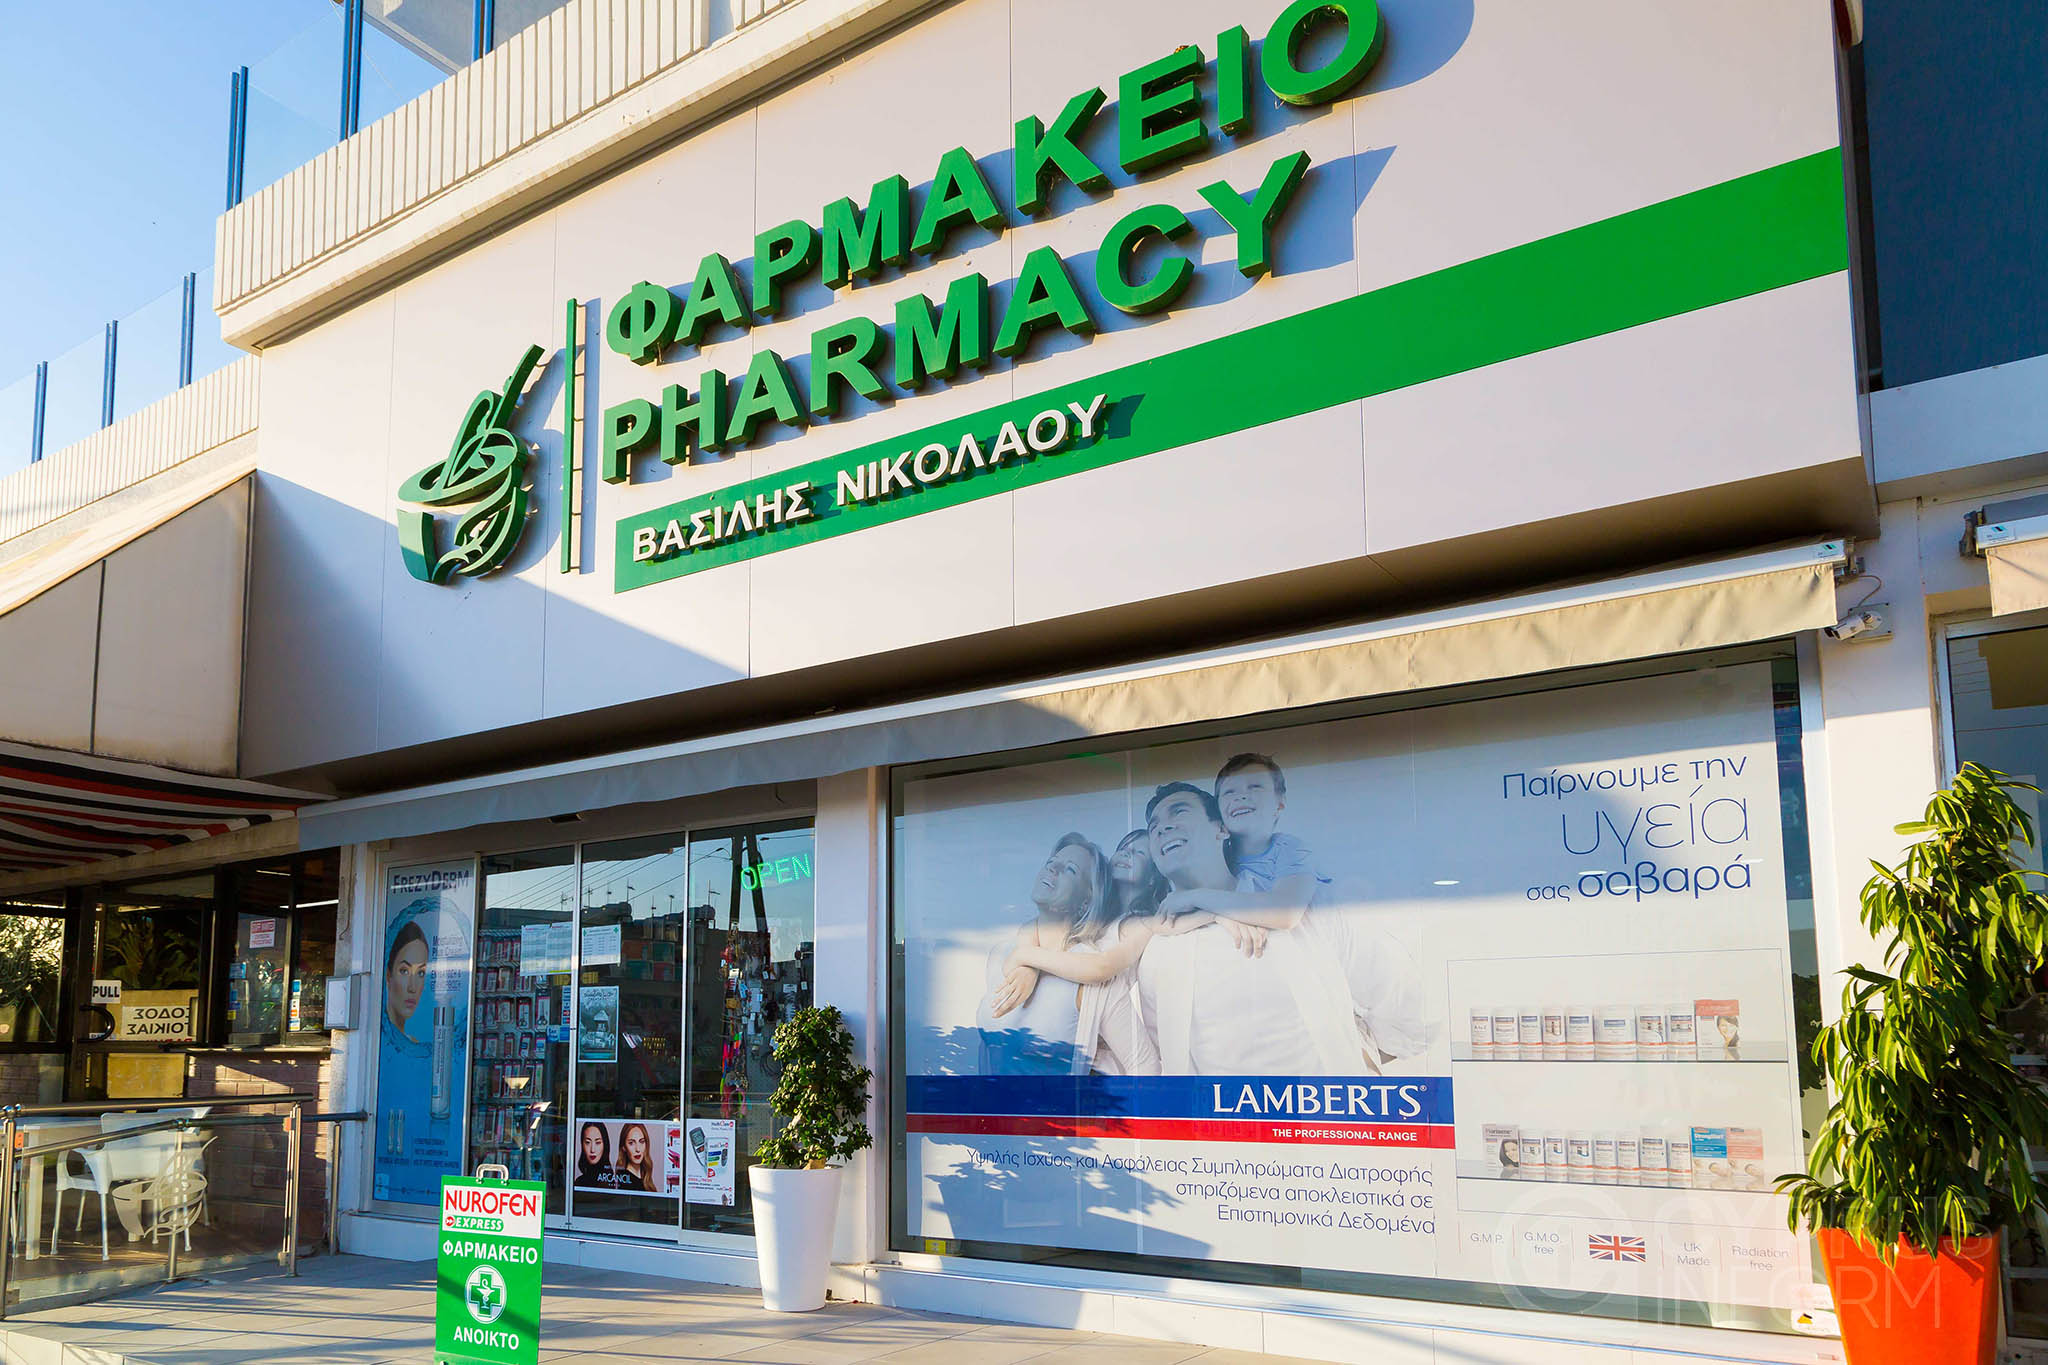 Vasilis Nikolaou Pharmacy: Chemists in Limassol | Cyprus inform